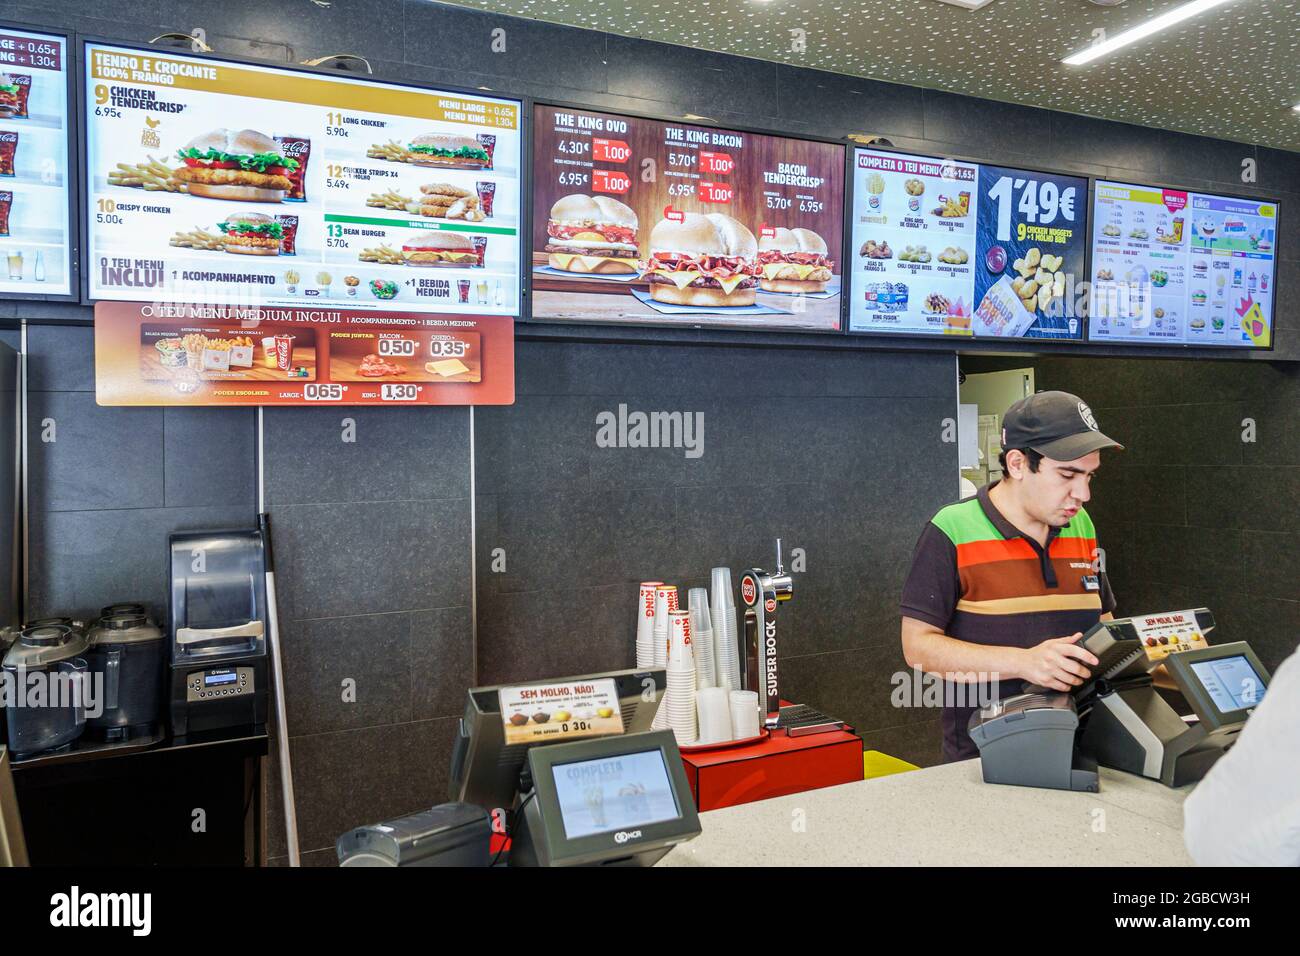 Burger King - Fast Food Restaurant in Sawgrass Mills